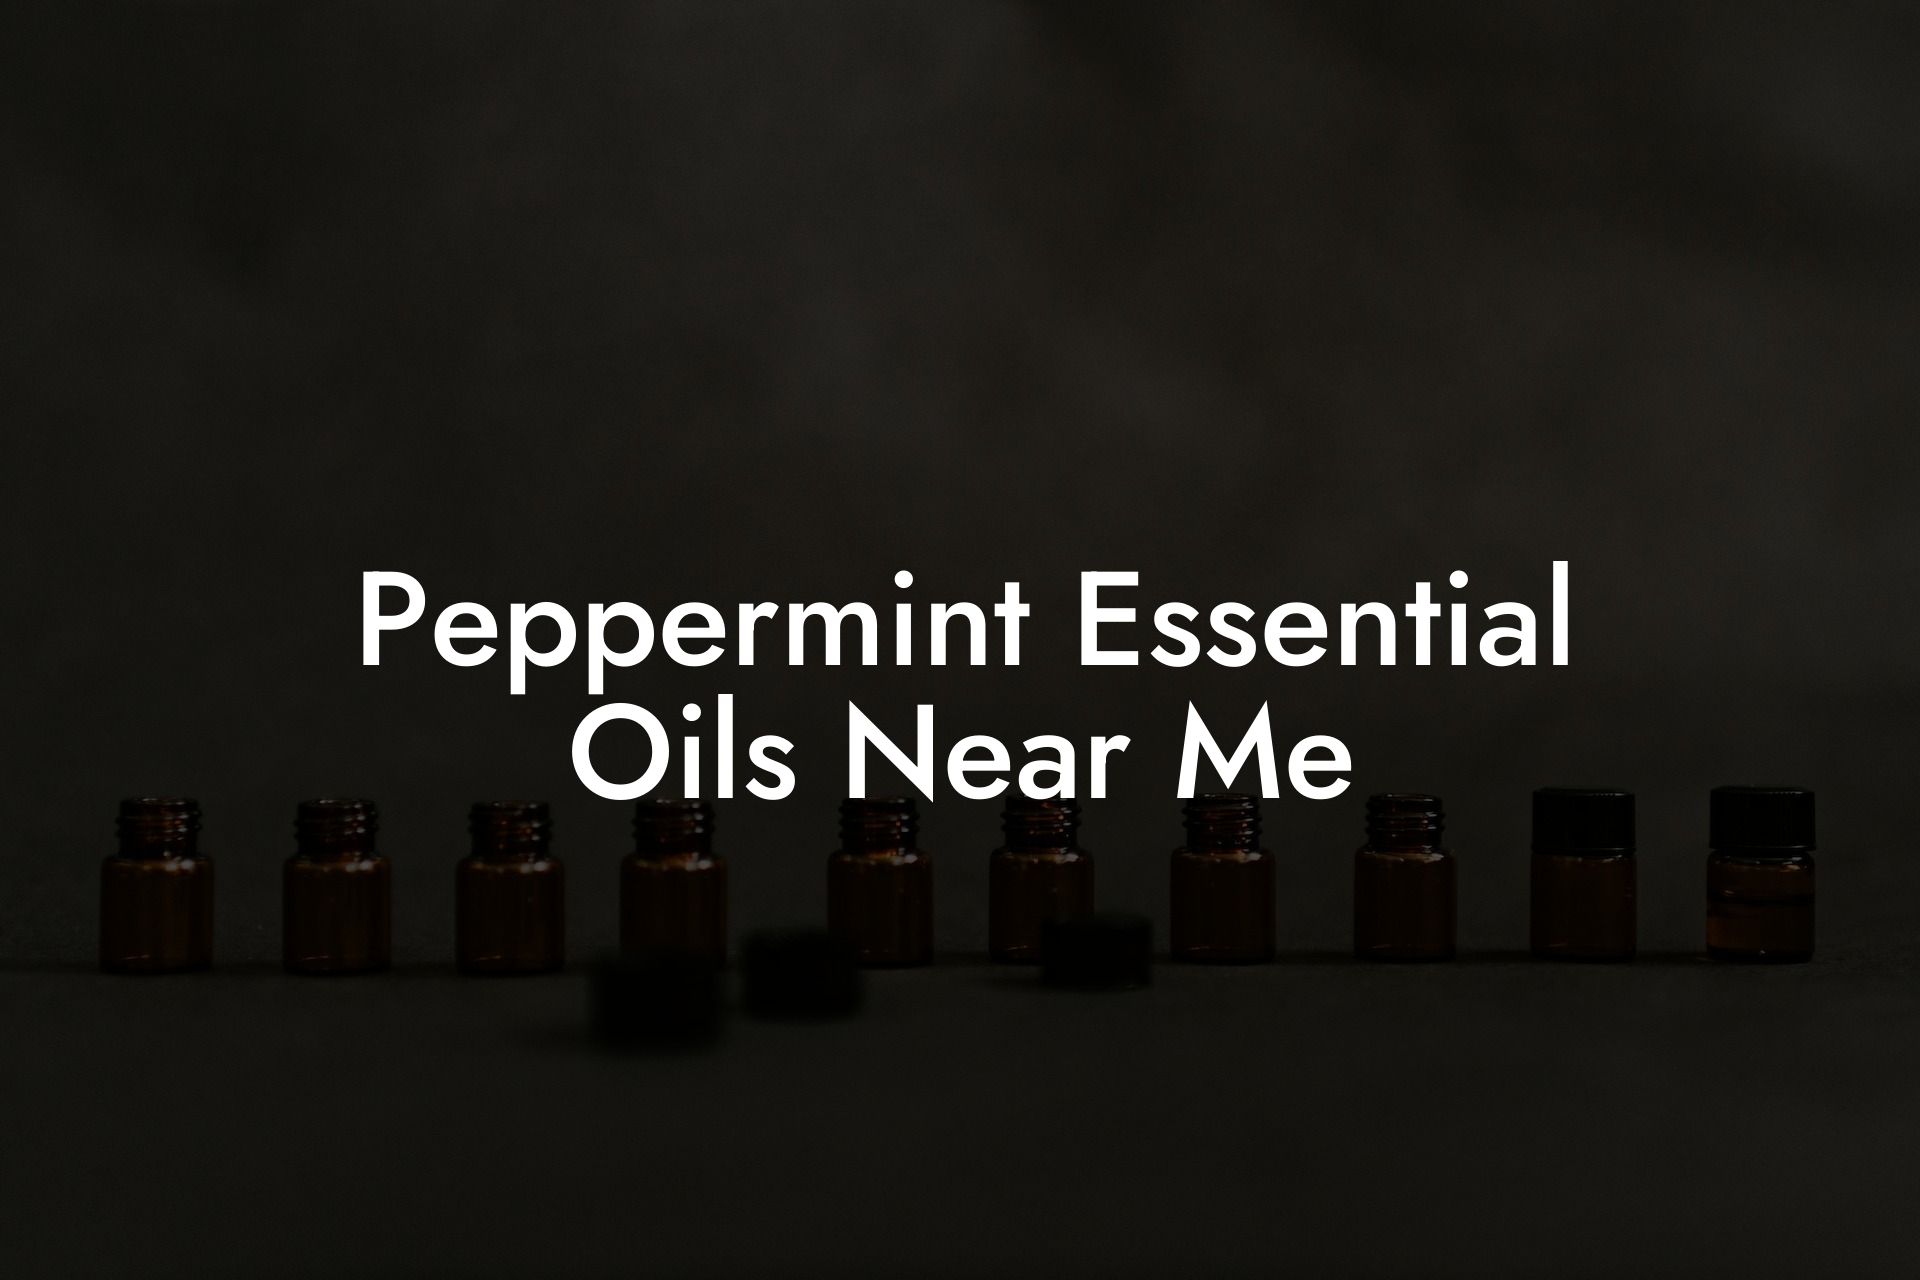 Peppermint Essential Oils Near Me